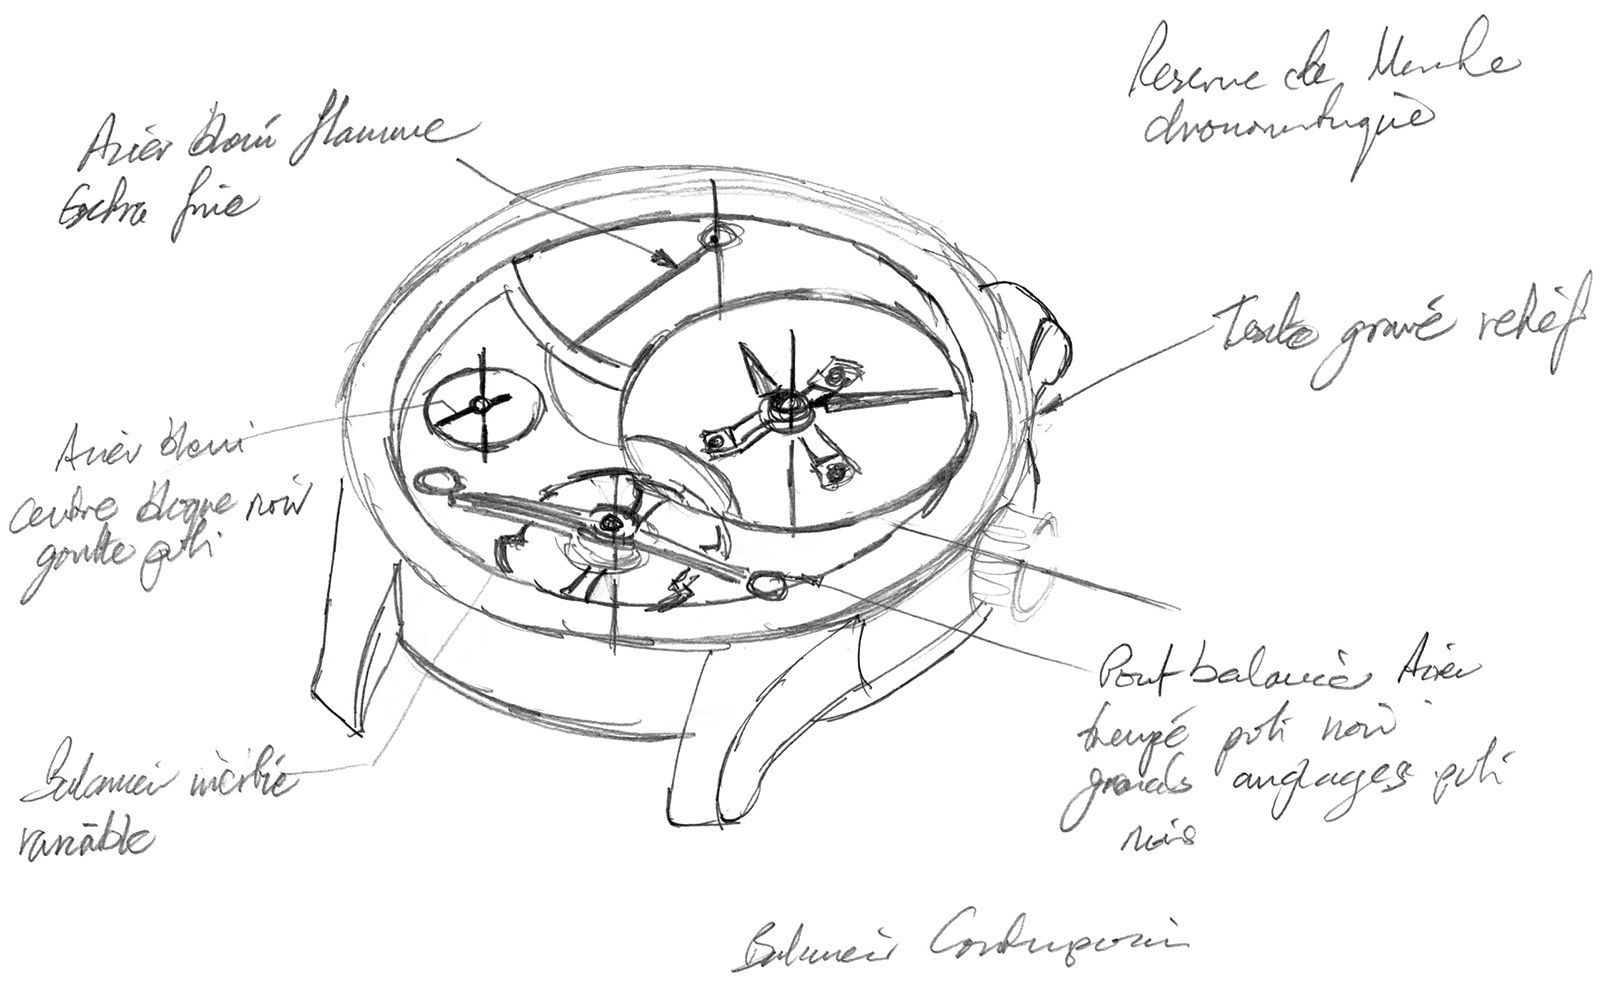 Pencil sketches outlining the key design features of the Balancier Contemporain.